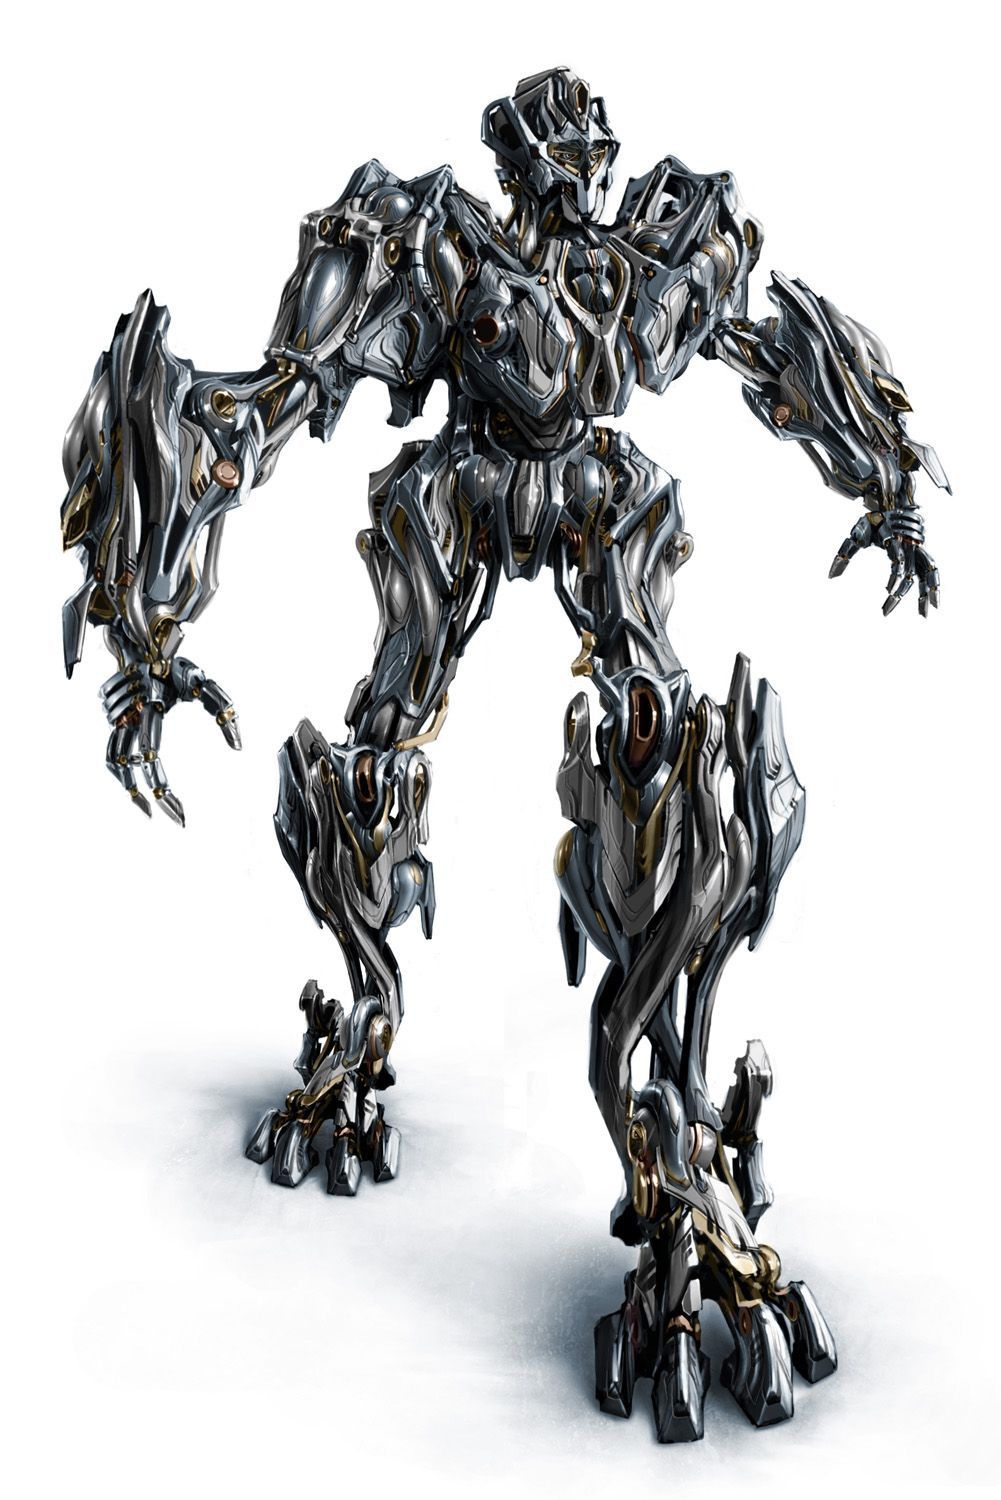 Autobot Optimus Prime Protoform (Transformer Franchise). Transformers movie, Transformers artwork, Transformers art